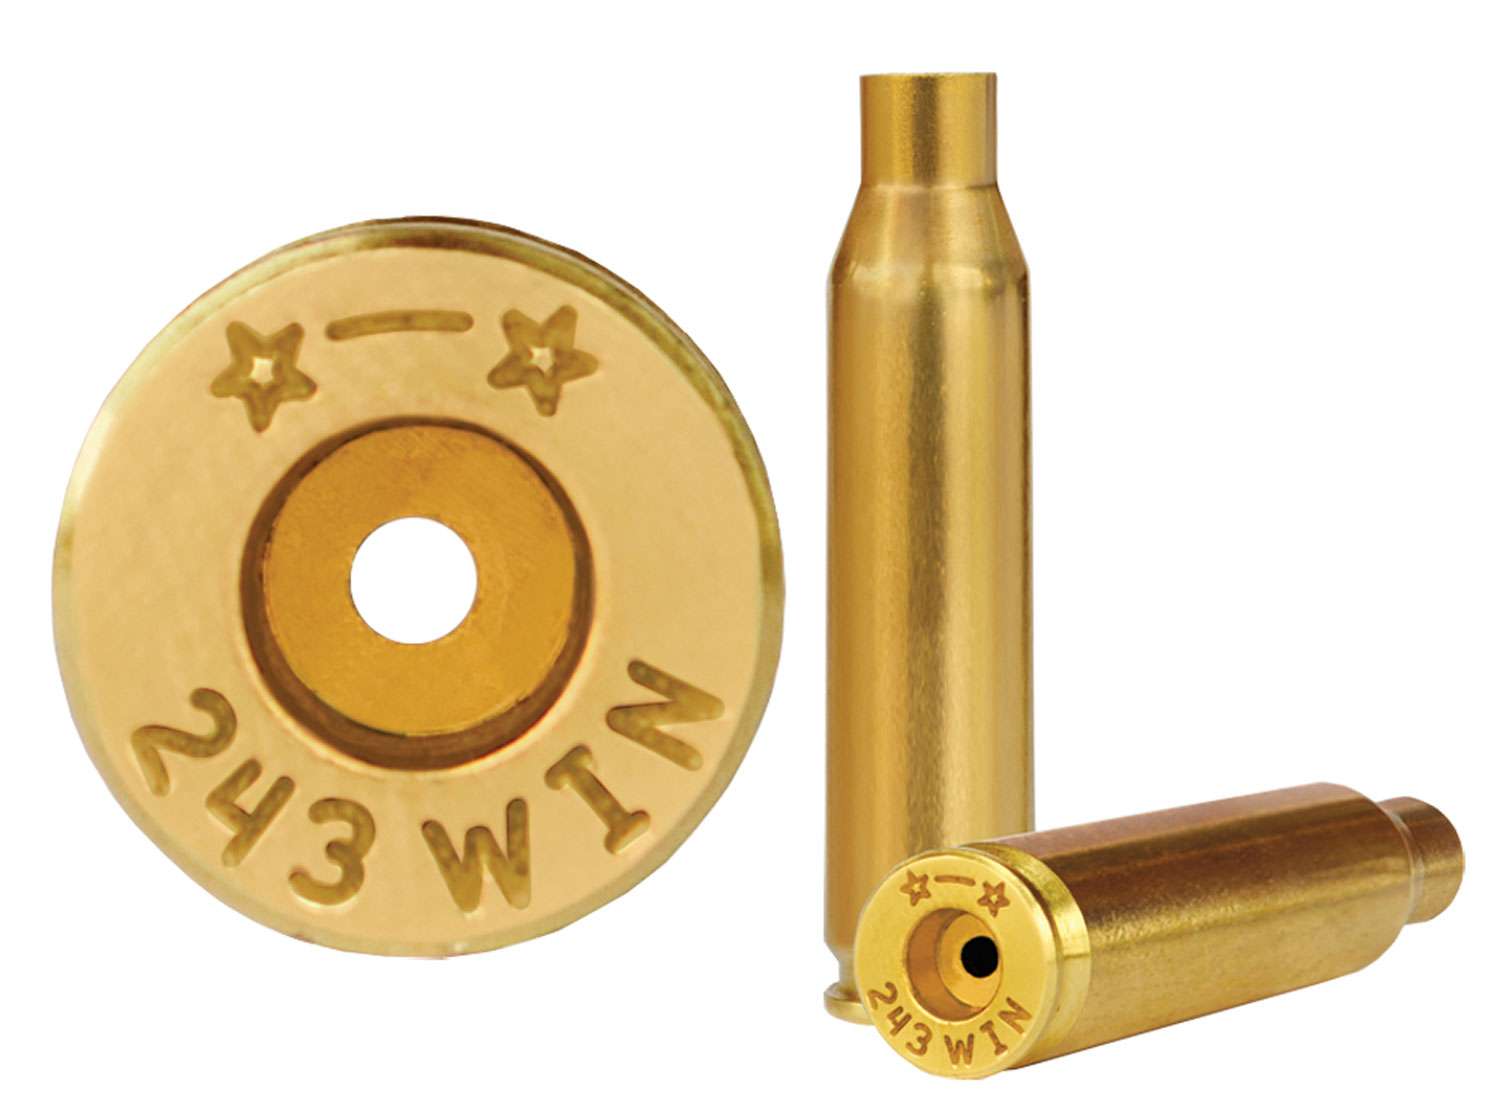 PPU 243 Winchester Brass (50 ct)